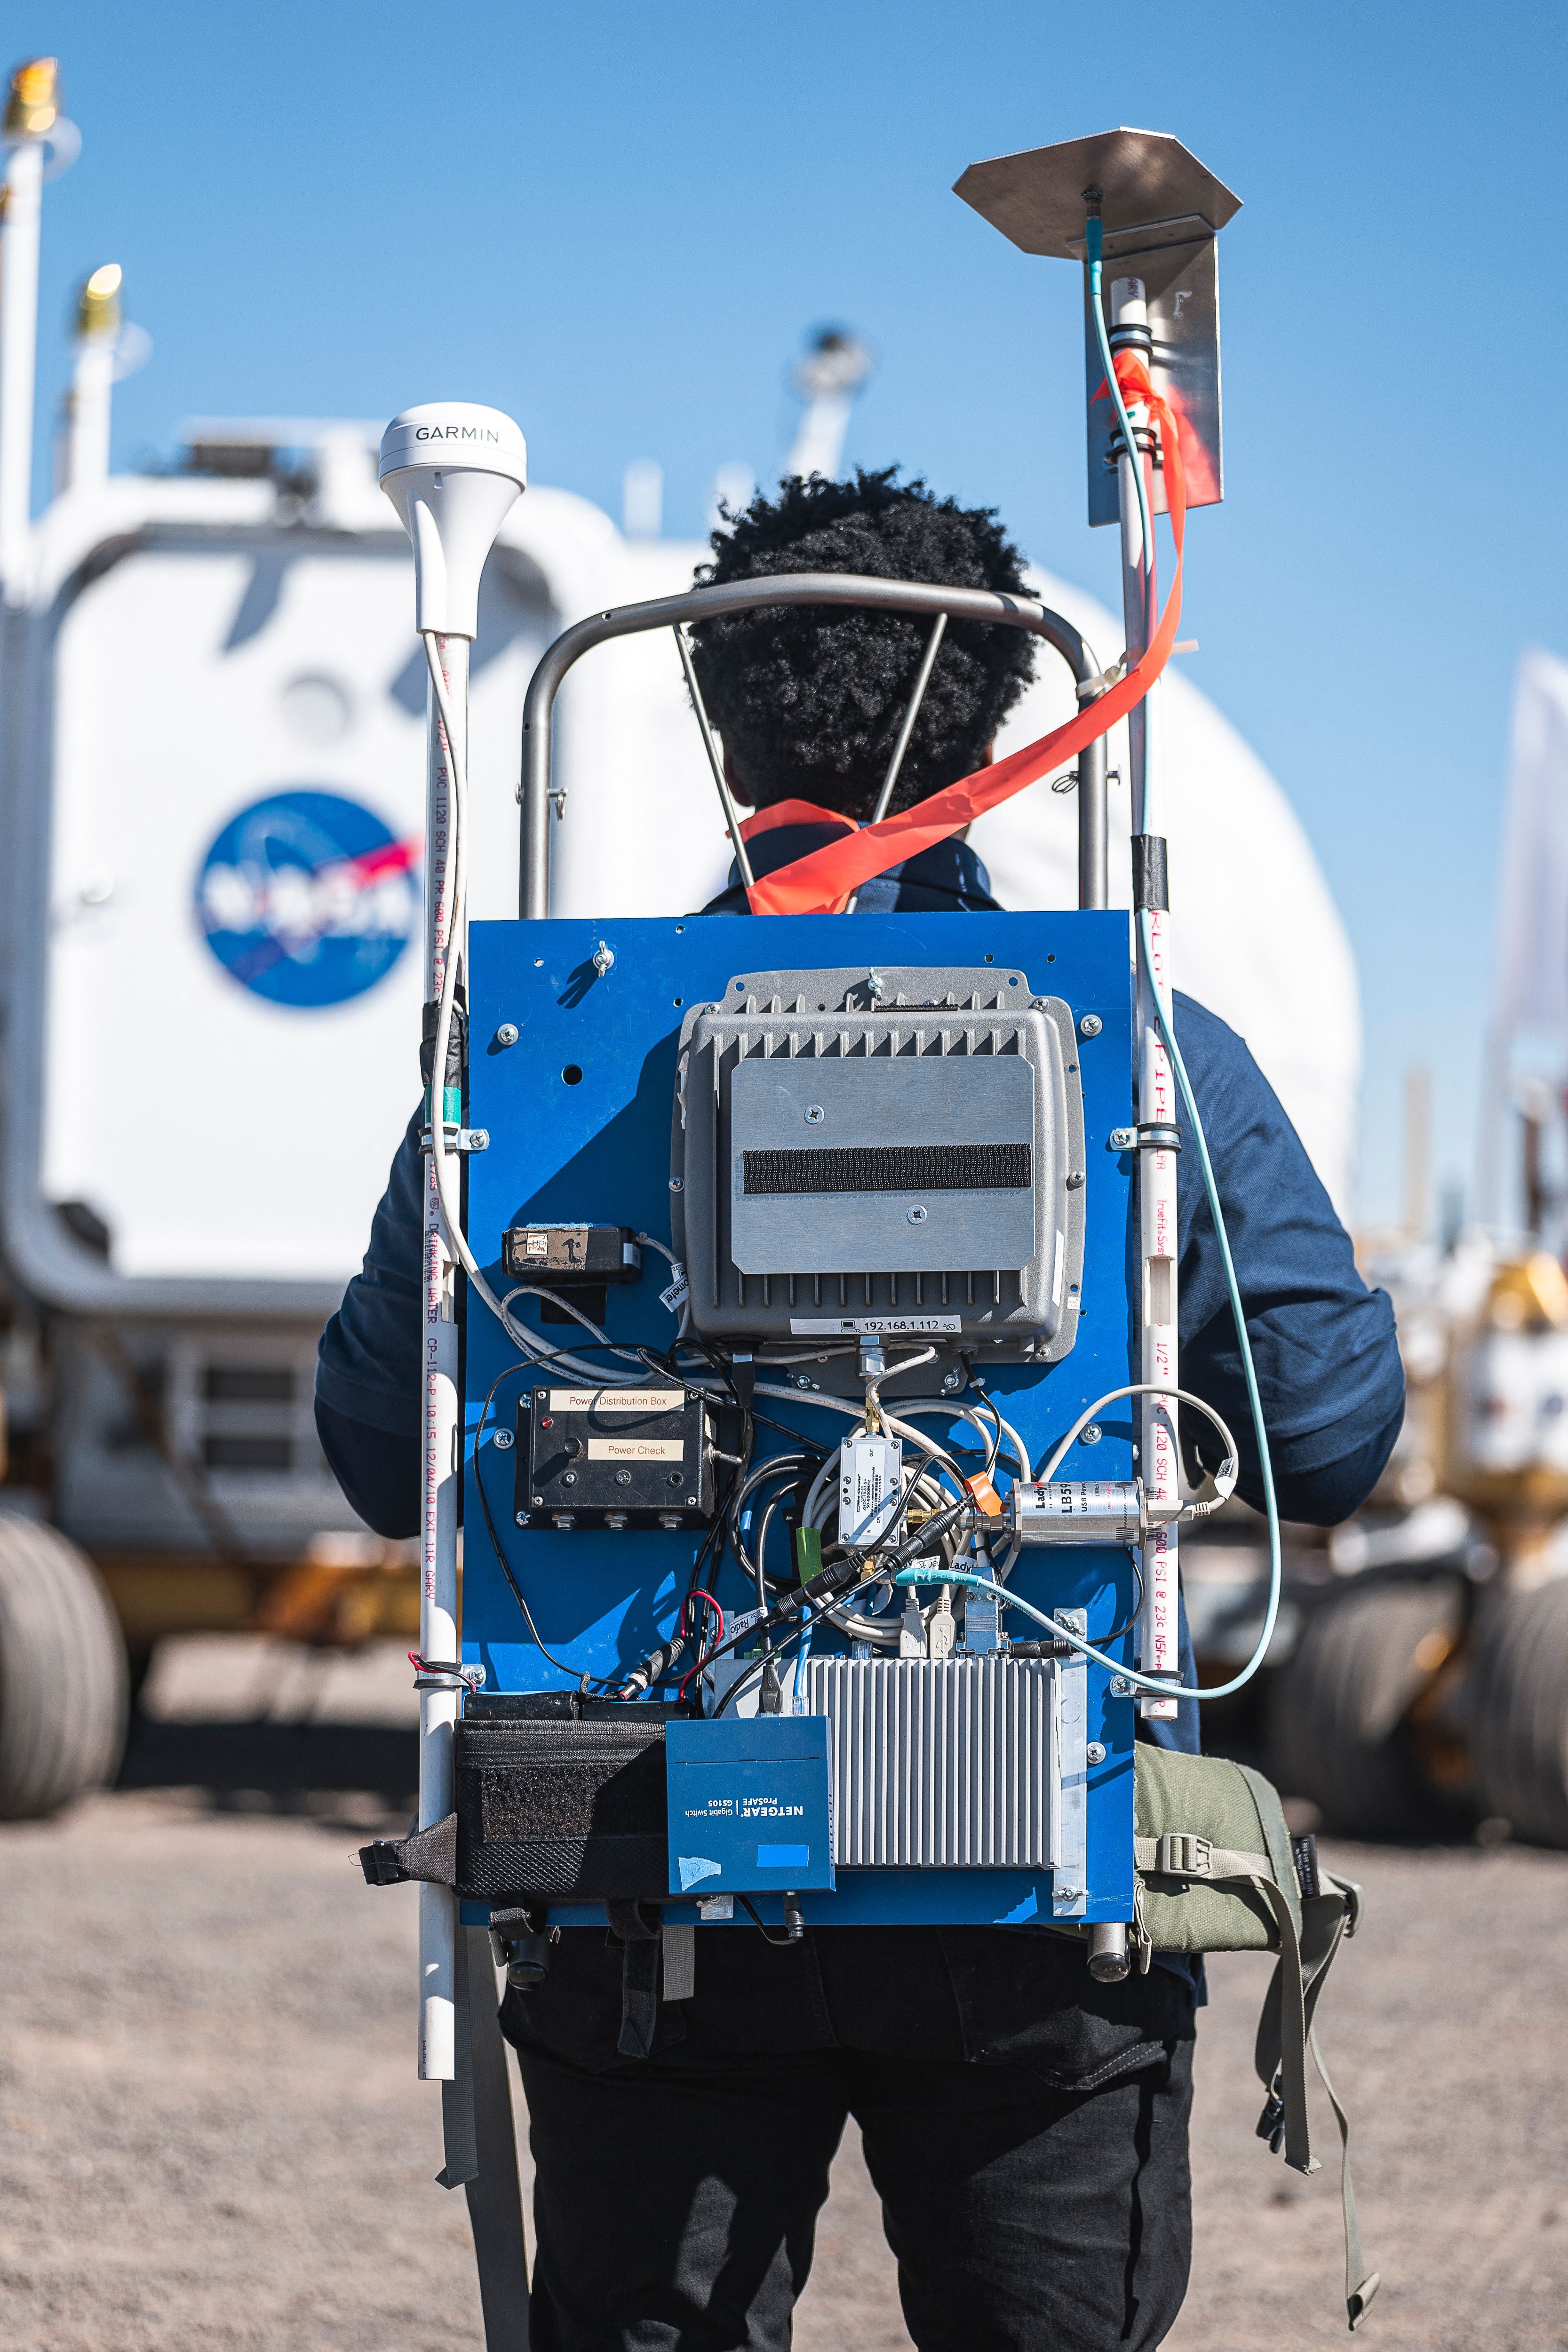 Astronauts Test NASA's Pressurized Lunar Rover for Artemis Mission